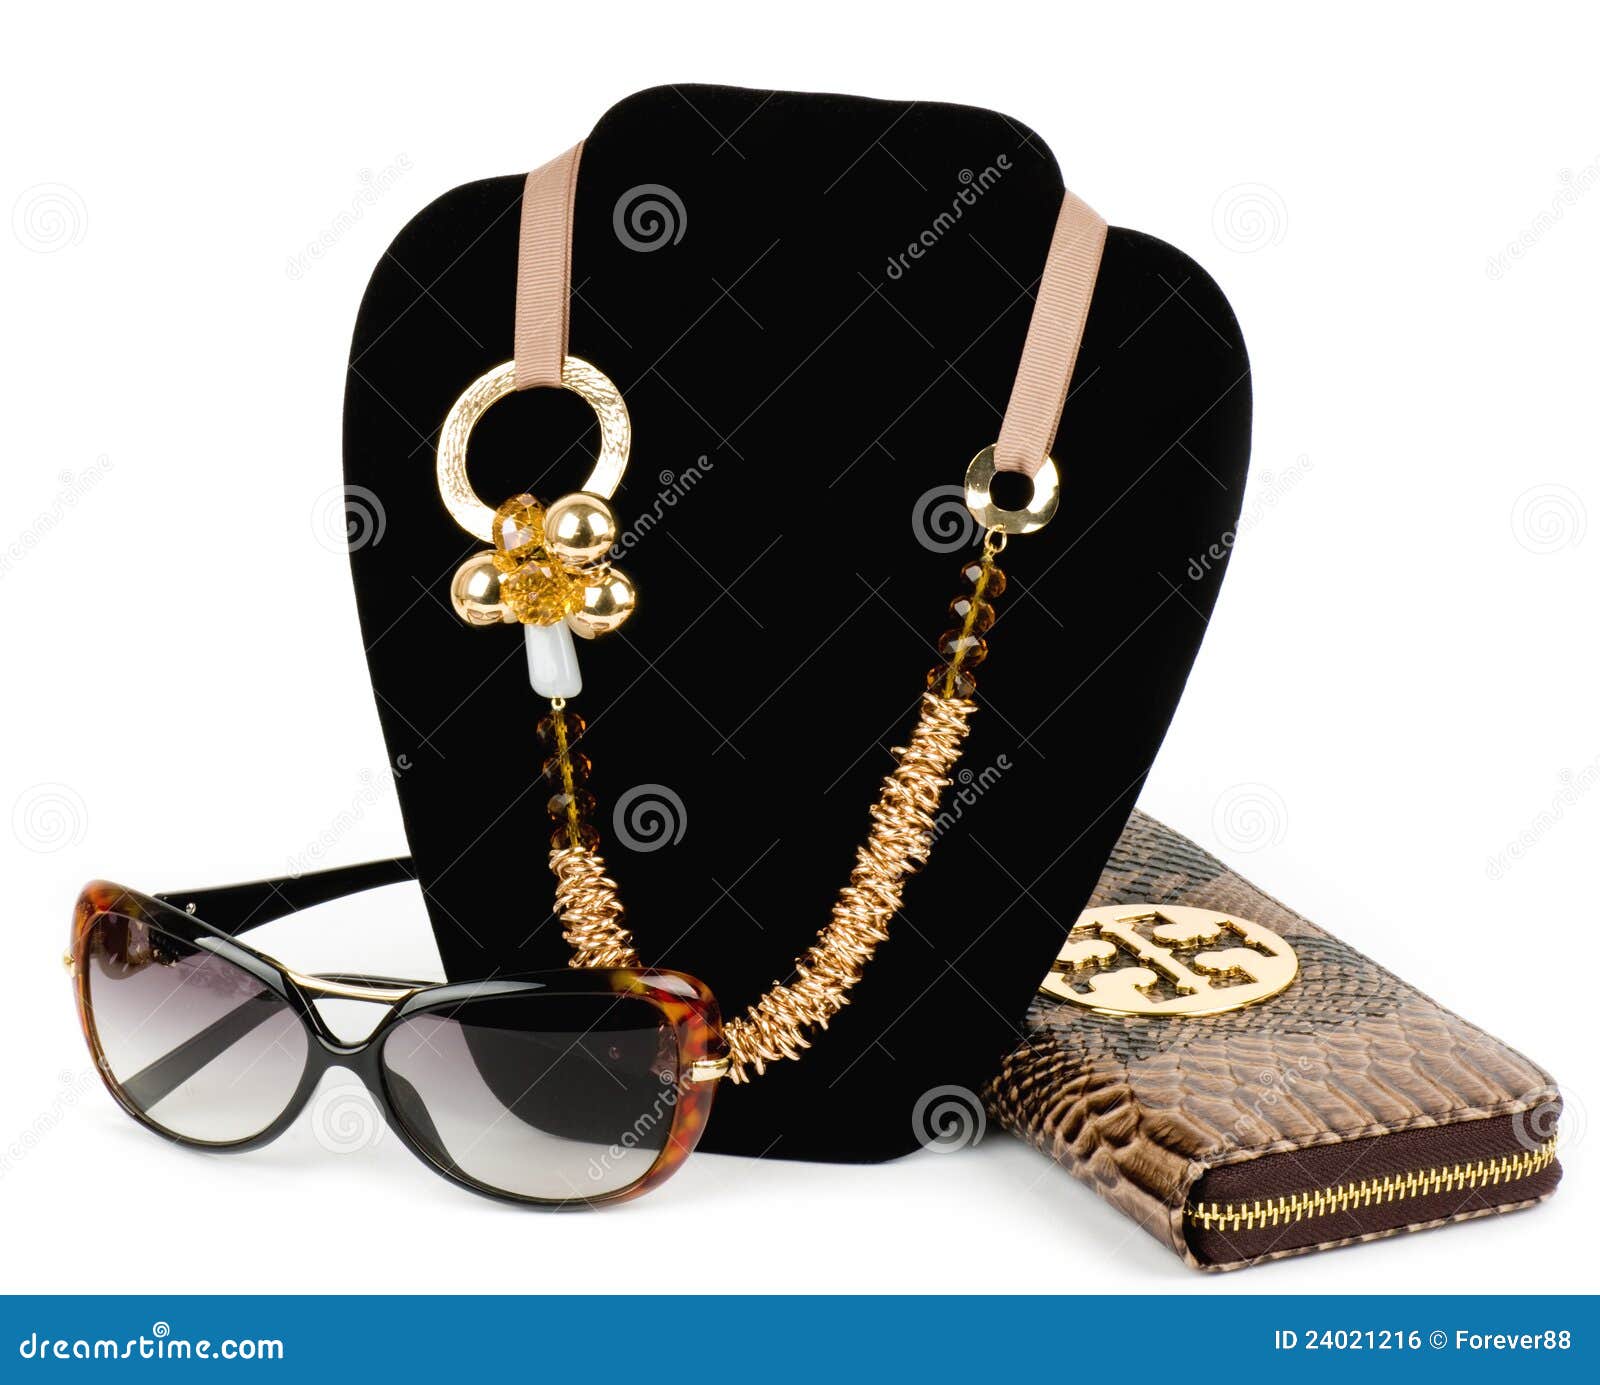 Golden Jewelry, Glasses And Handbag Royalty Free Stock Image - Image: 24021216